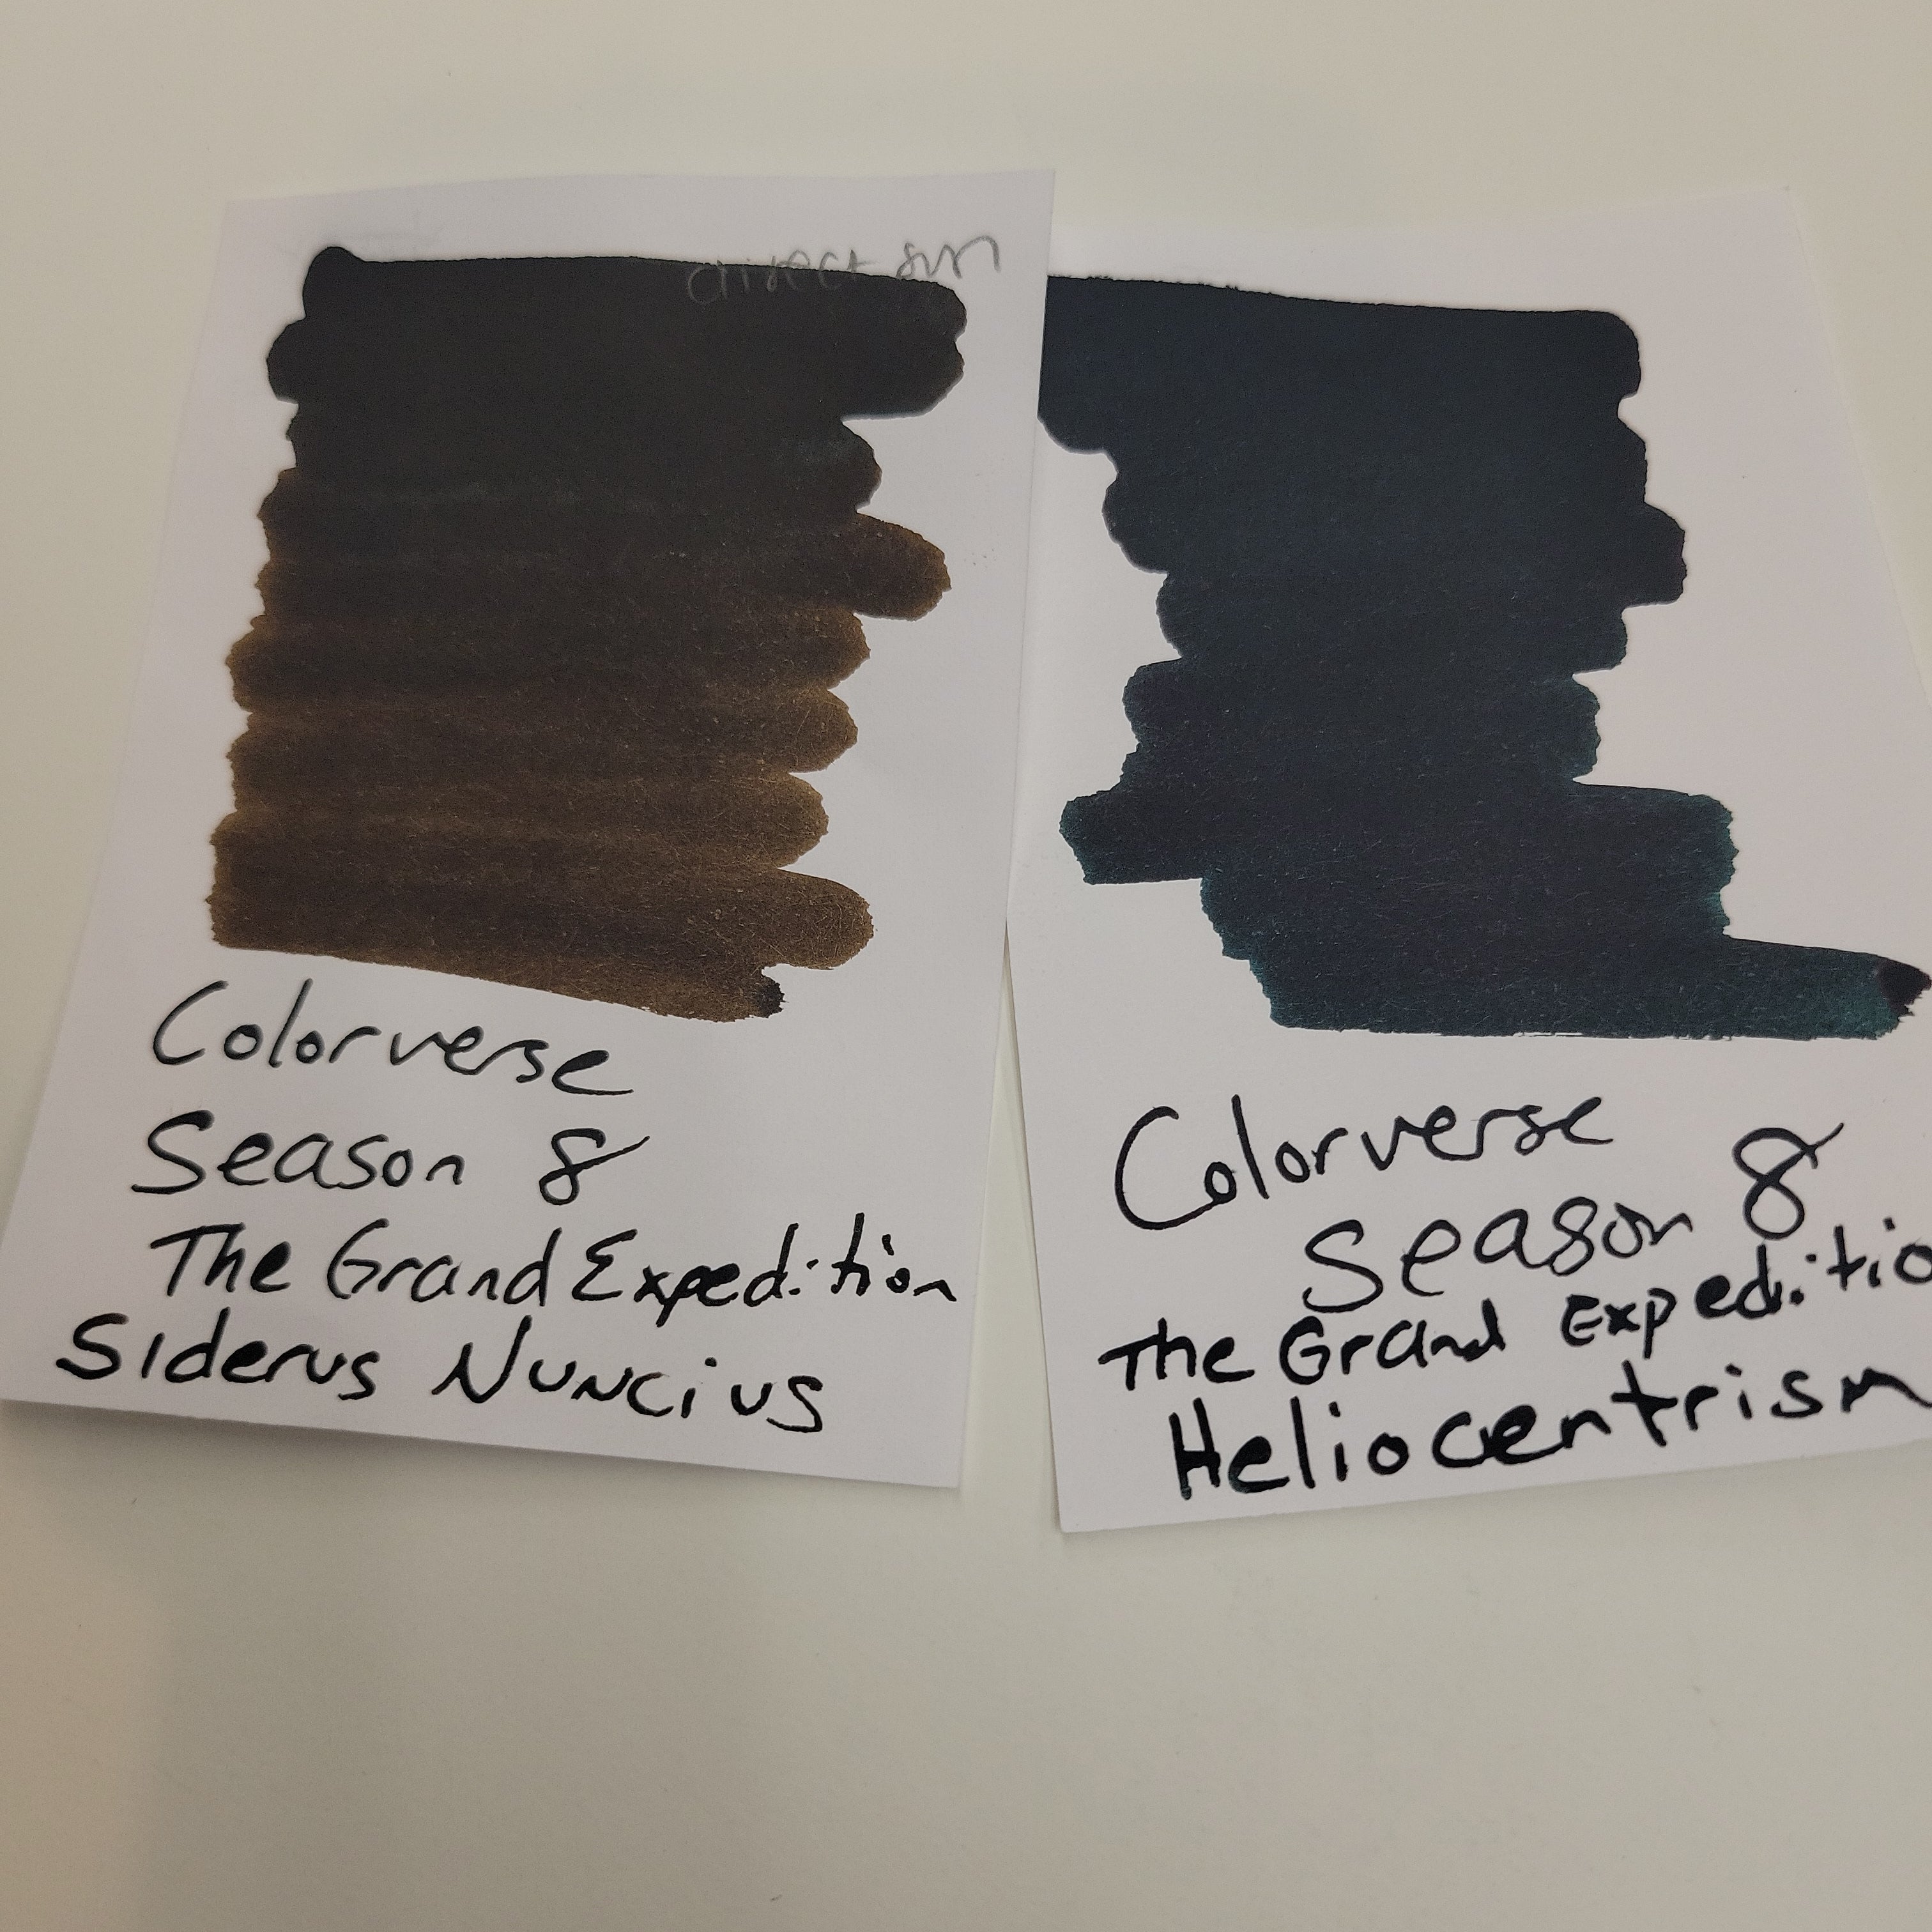 Colorverse Ink - Grand Expedition - Sidereus Nuncius & Heliocemtrism Colorverse